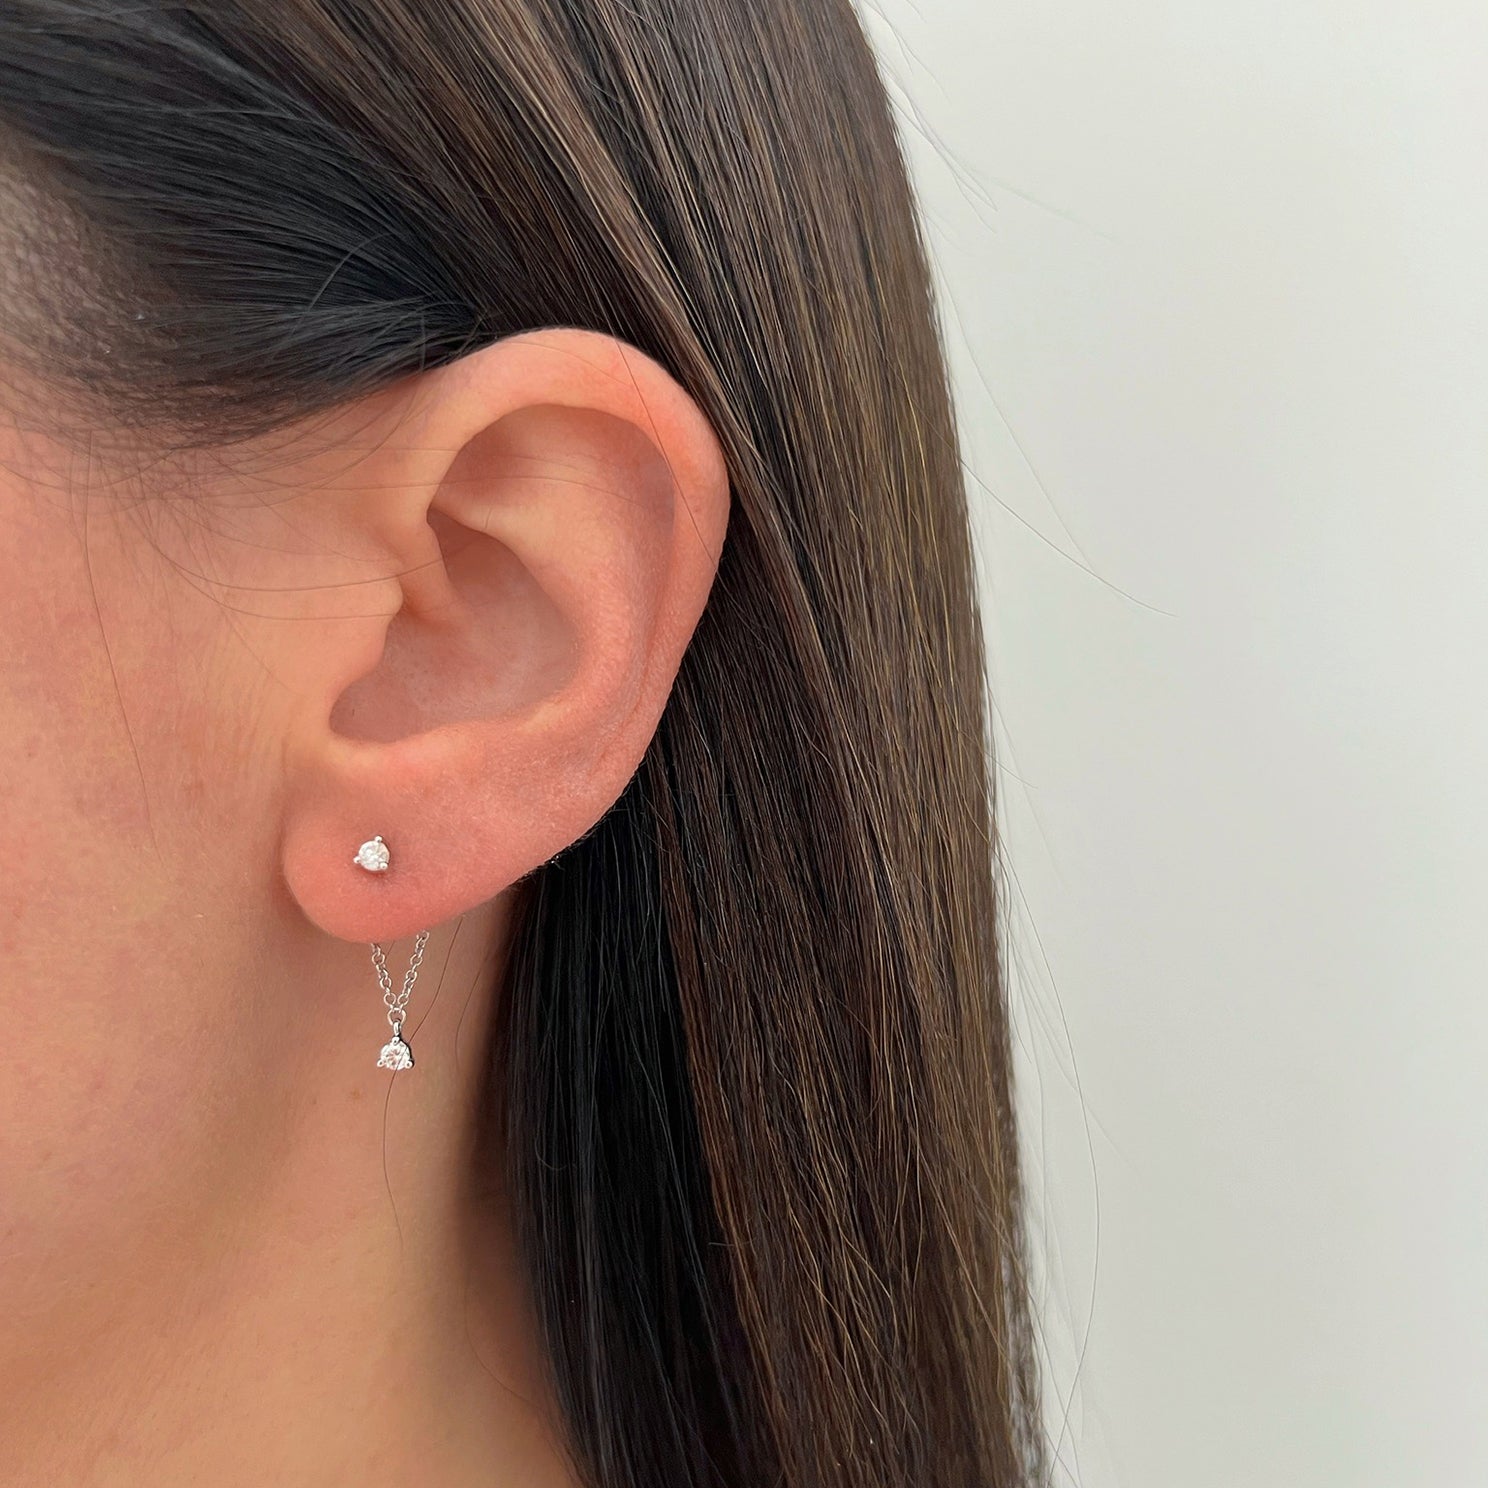 Suspended Diamond Stud Earring in 14k white gold styled on ear lobe of model